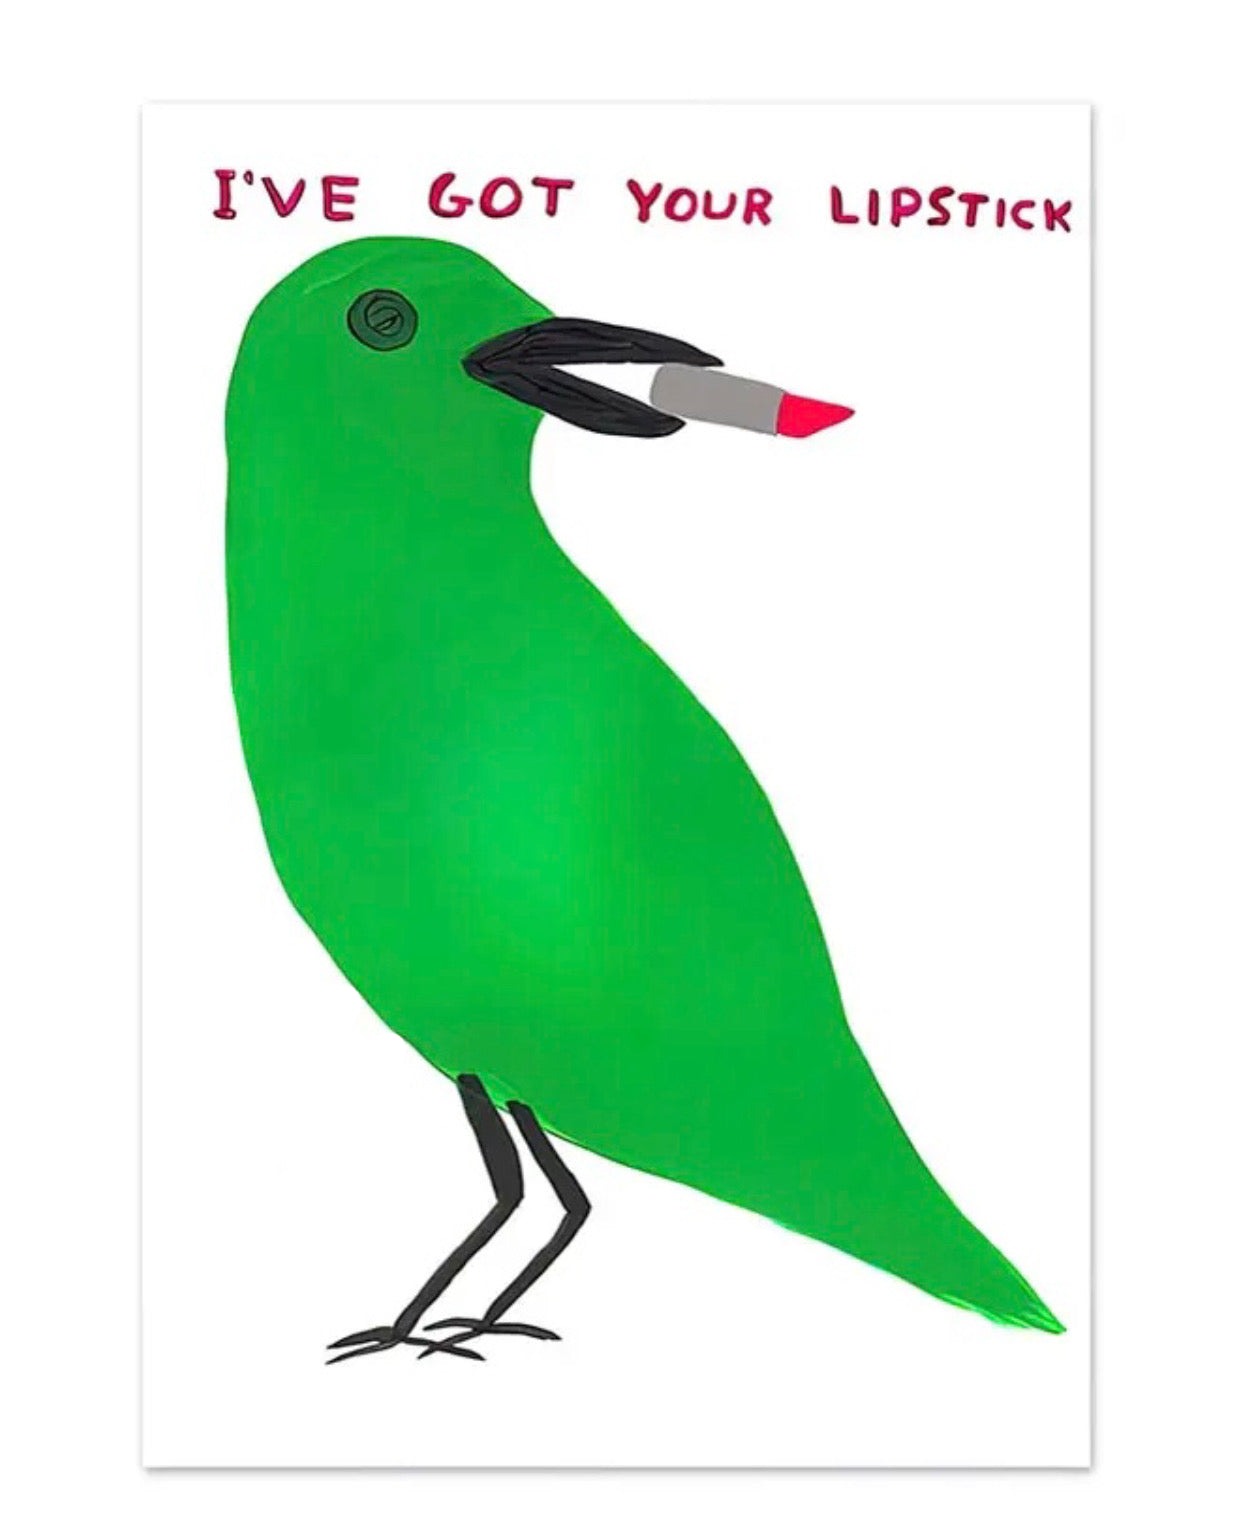 "i've got your lipstick" poster